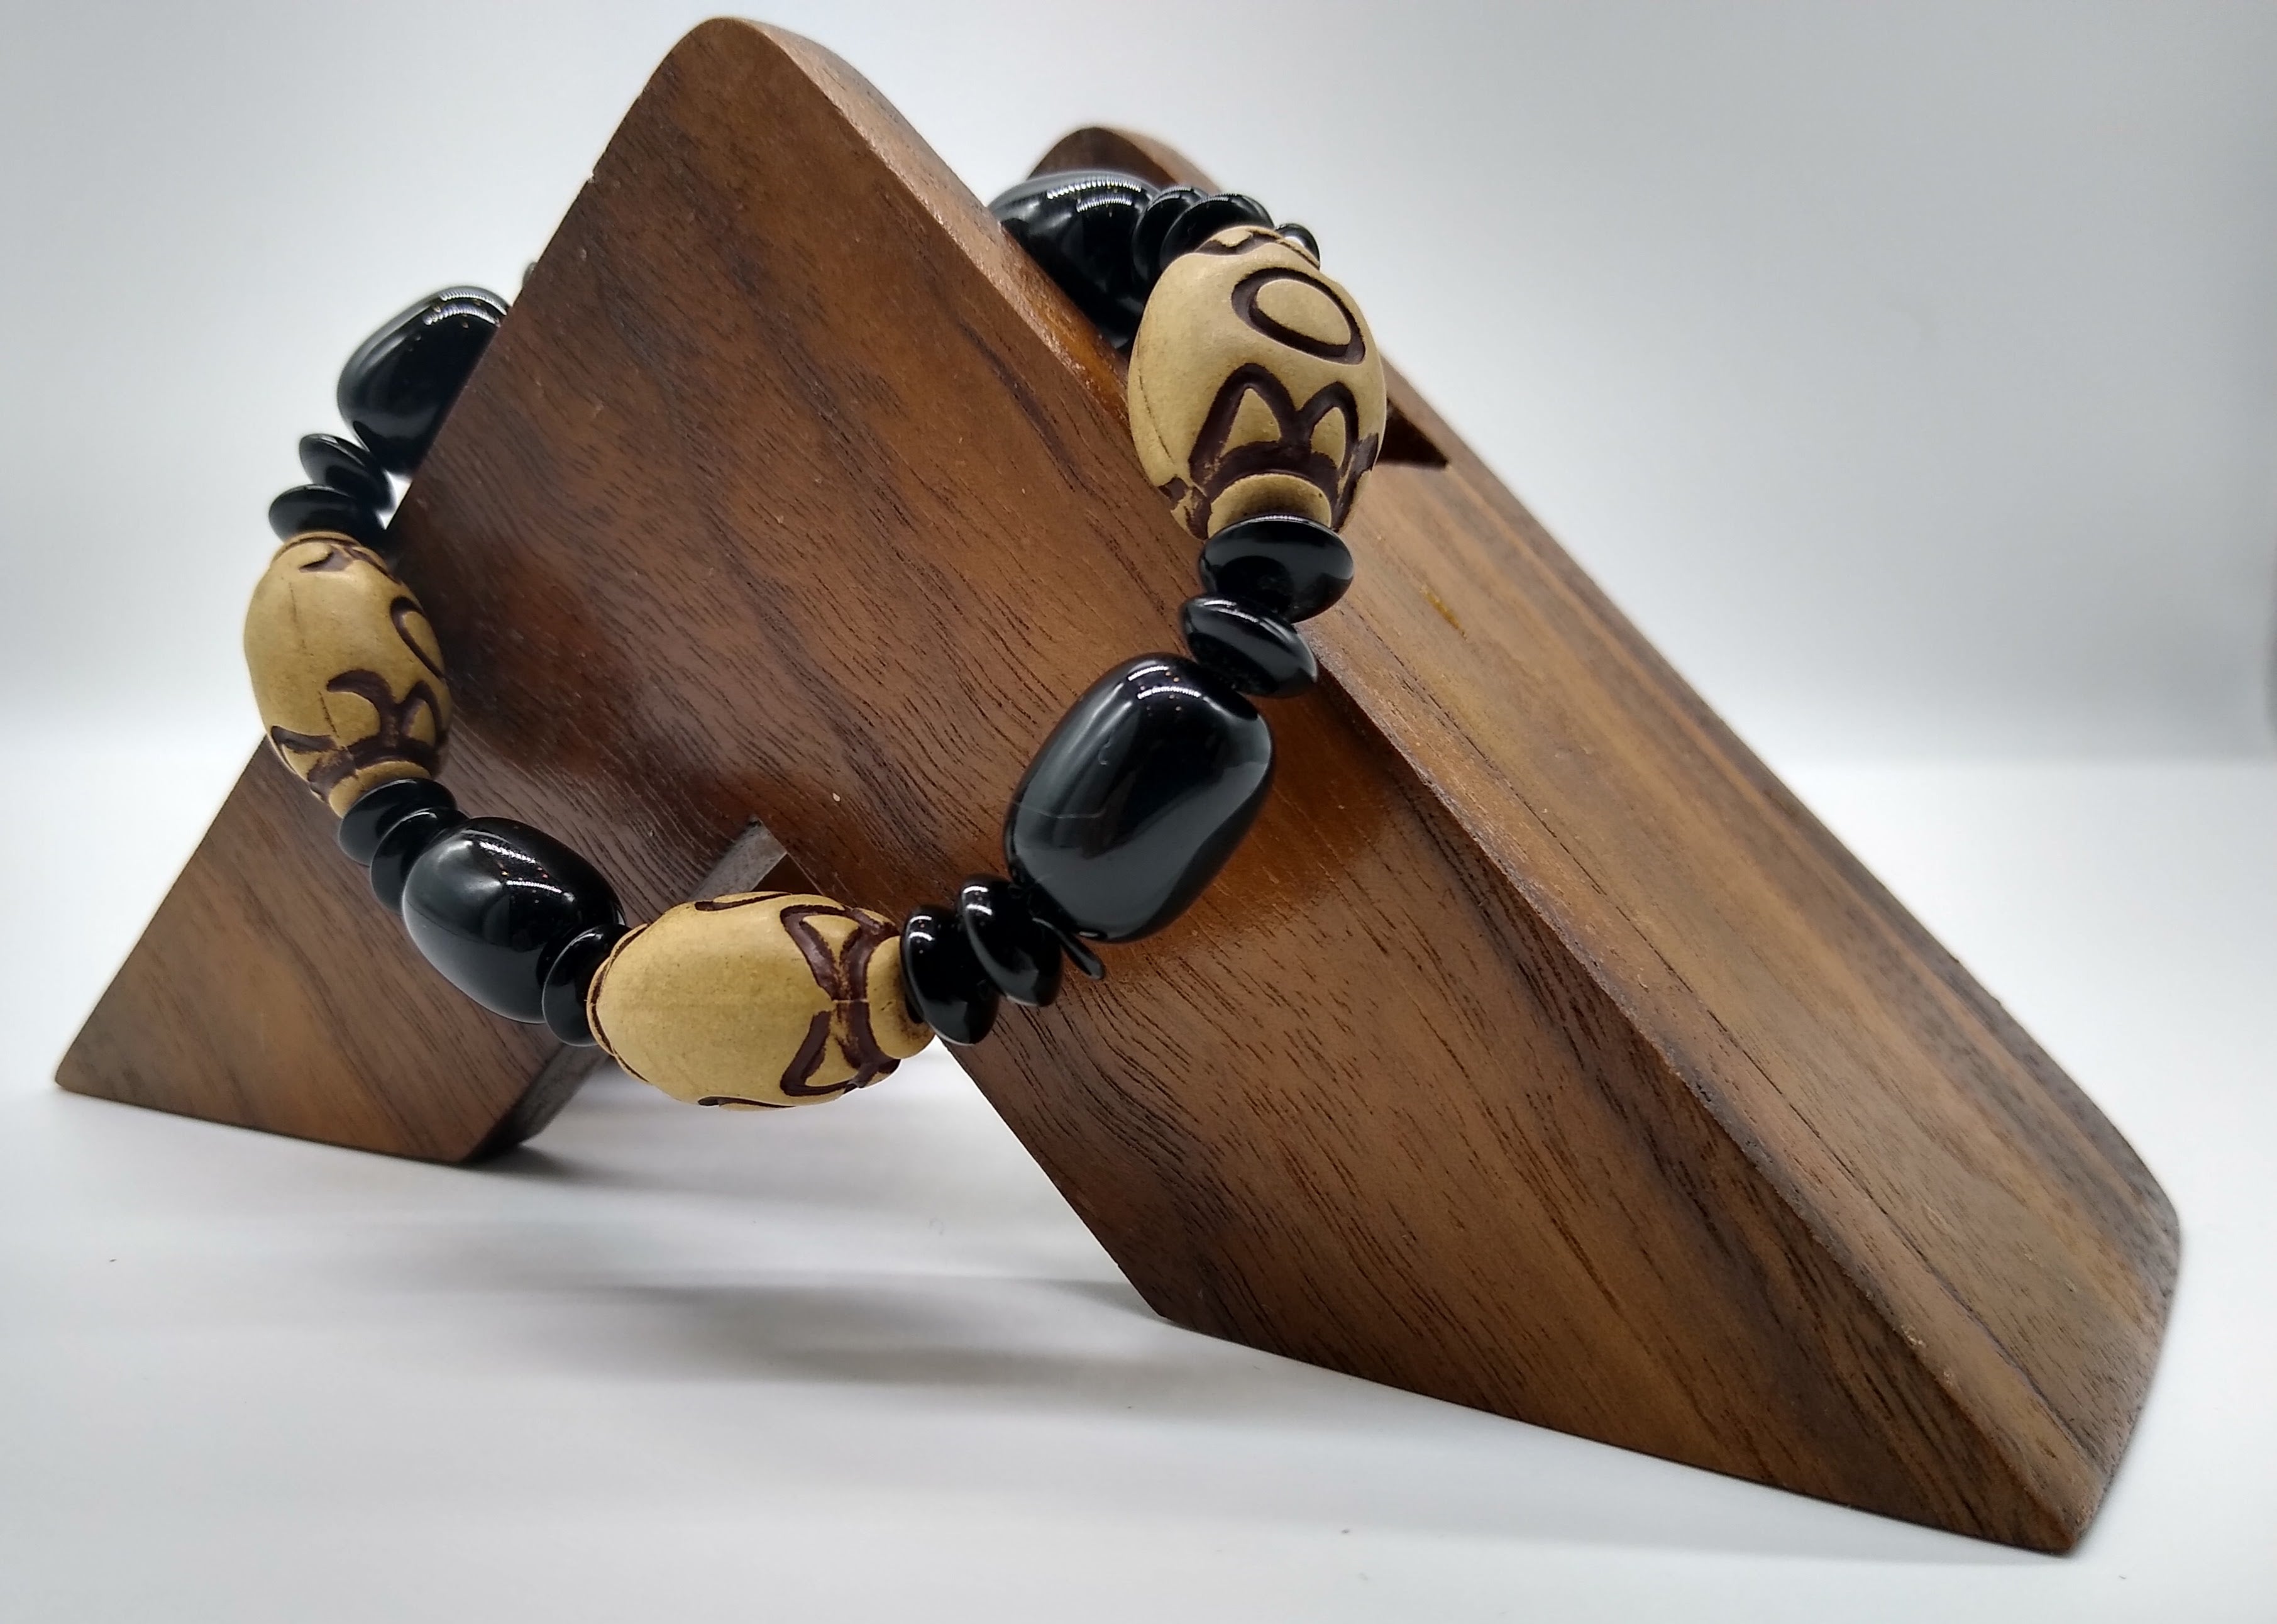 Wooden Beaded Bracelets